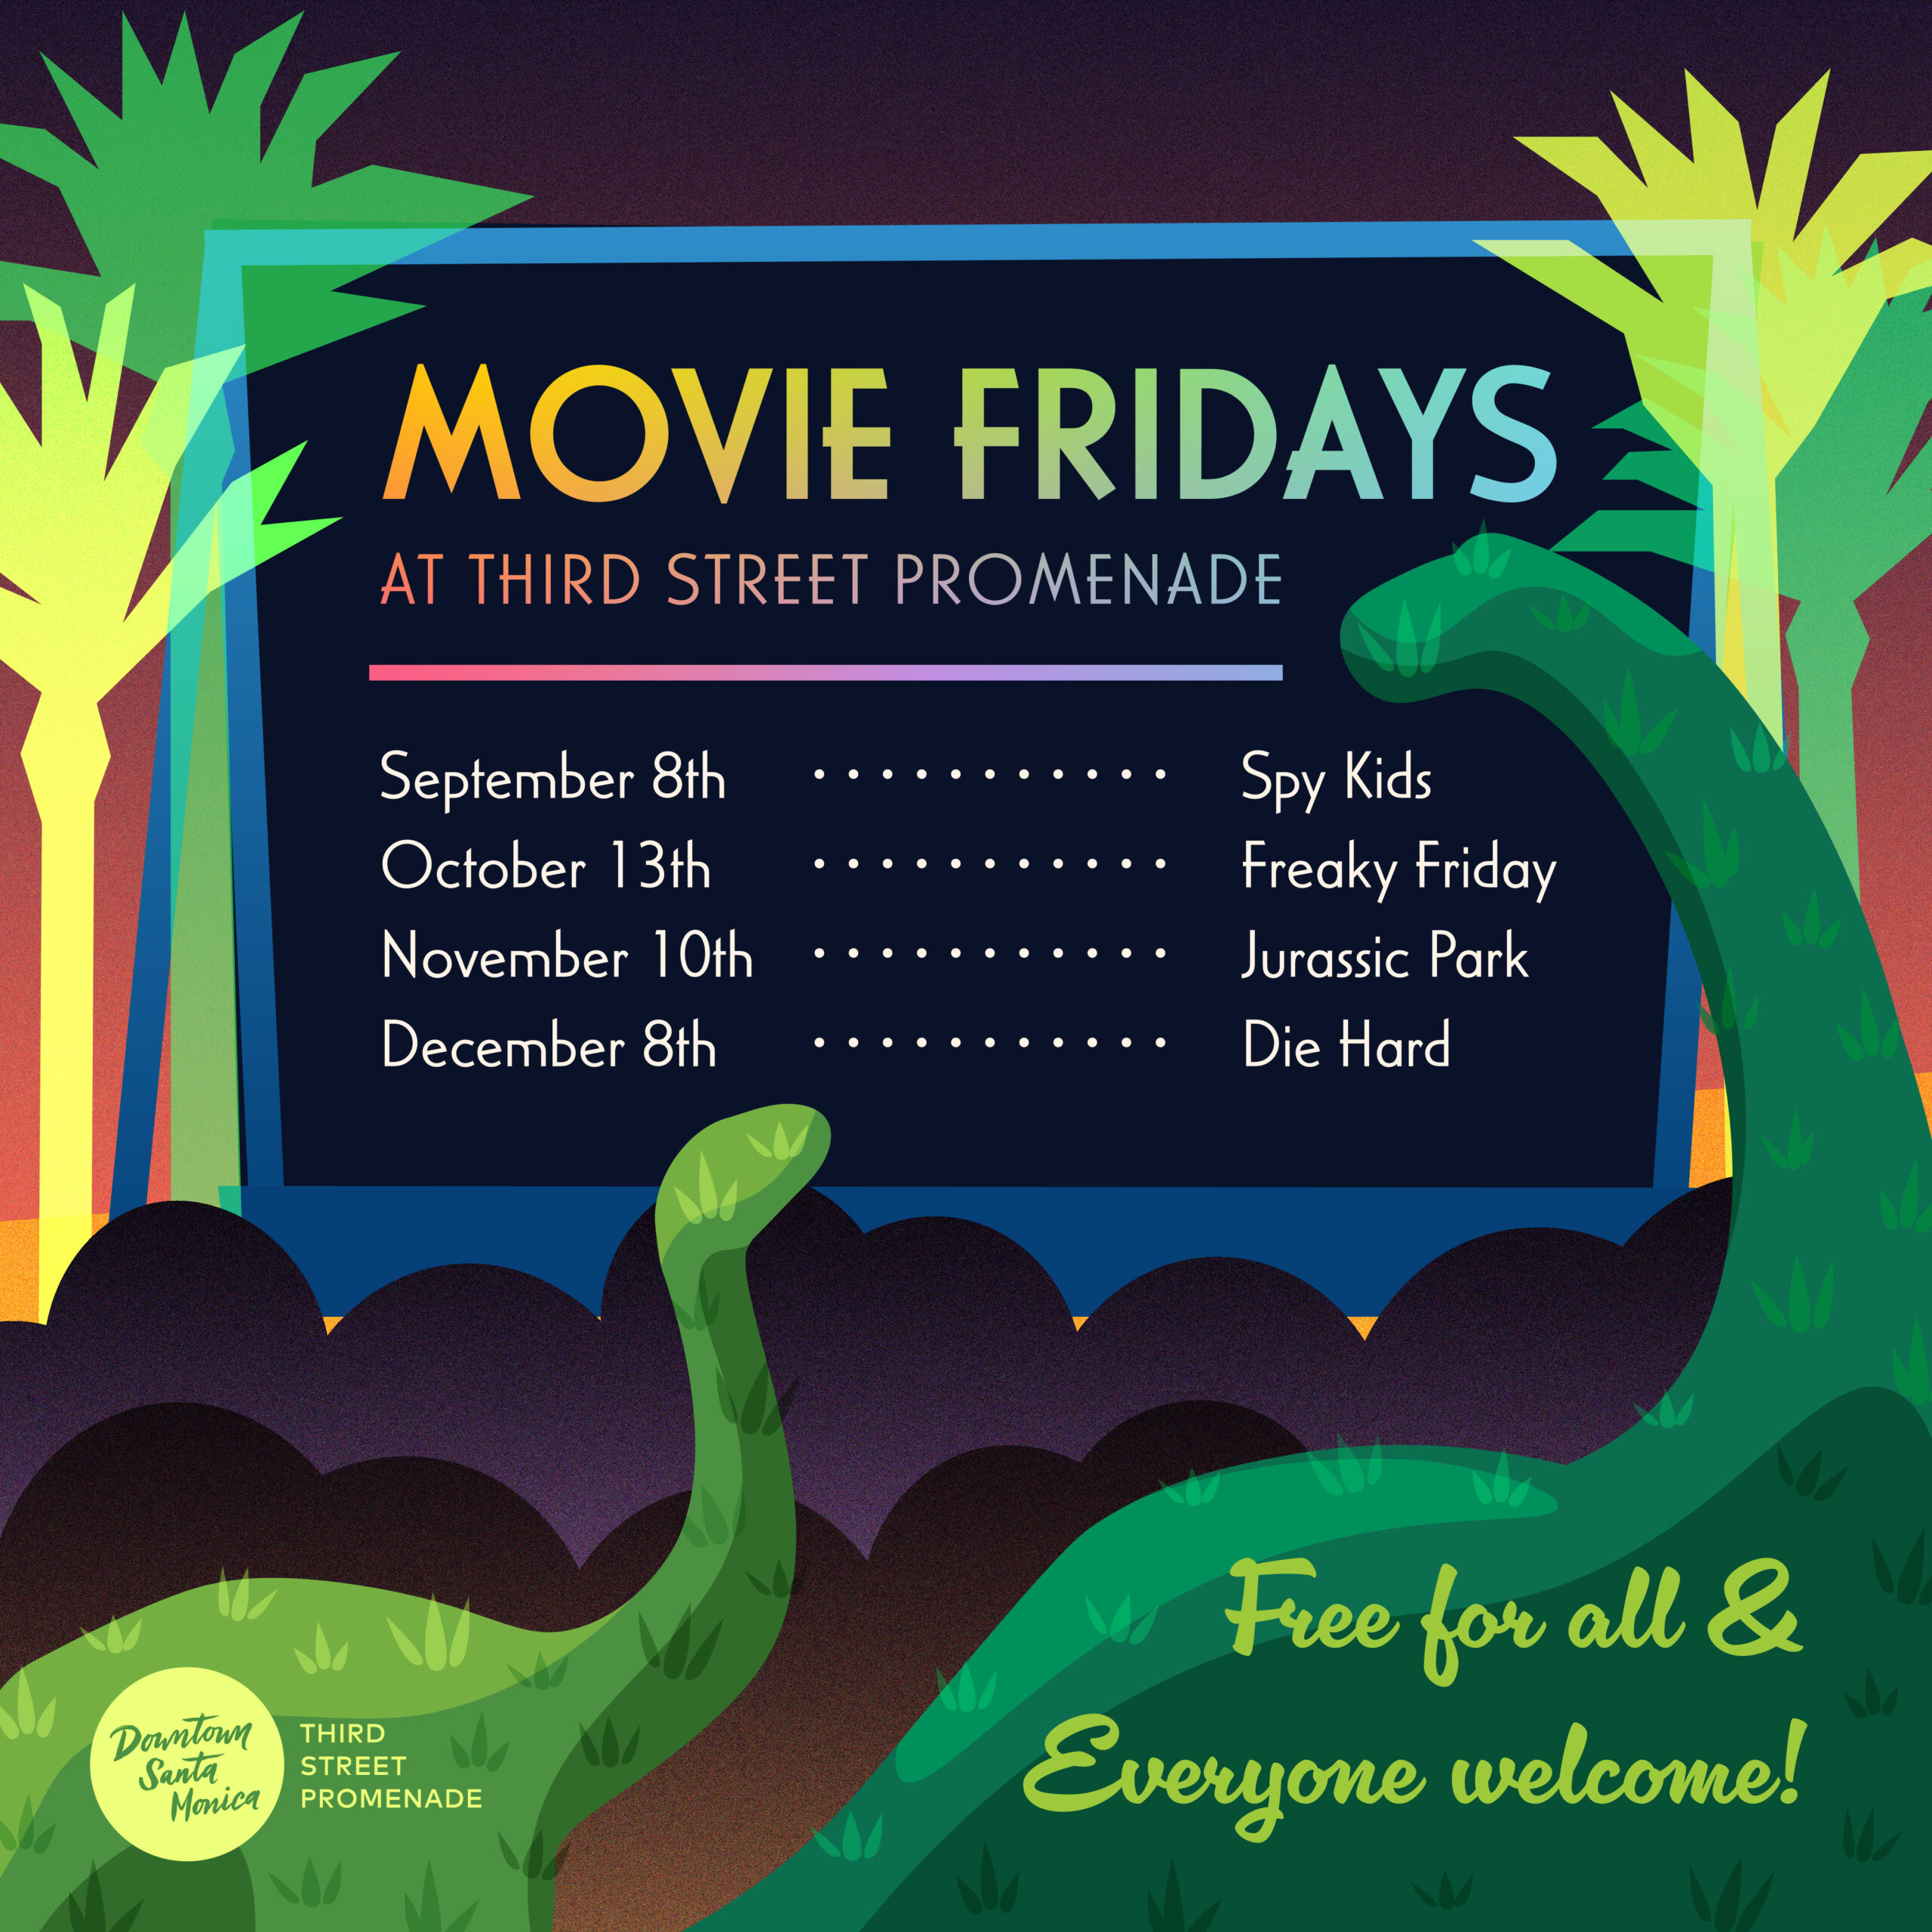 Movie Fridays